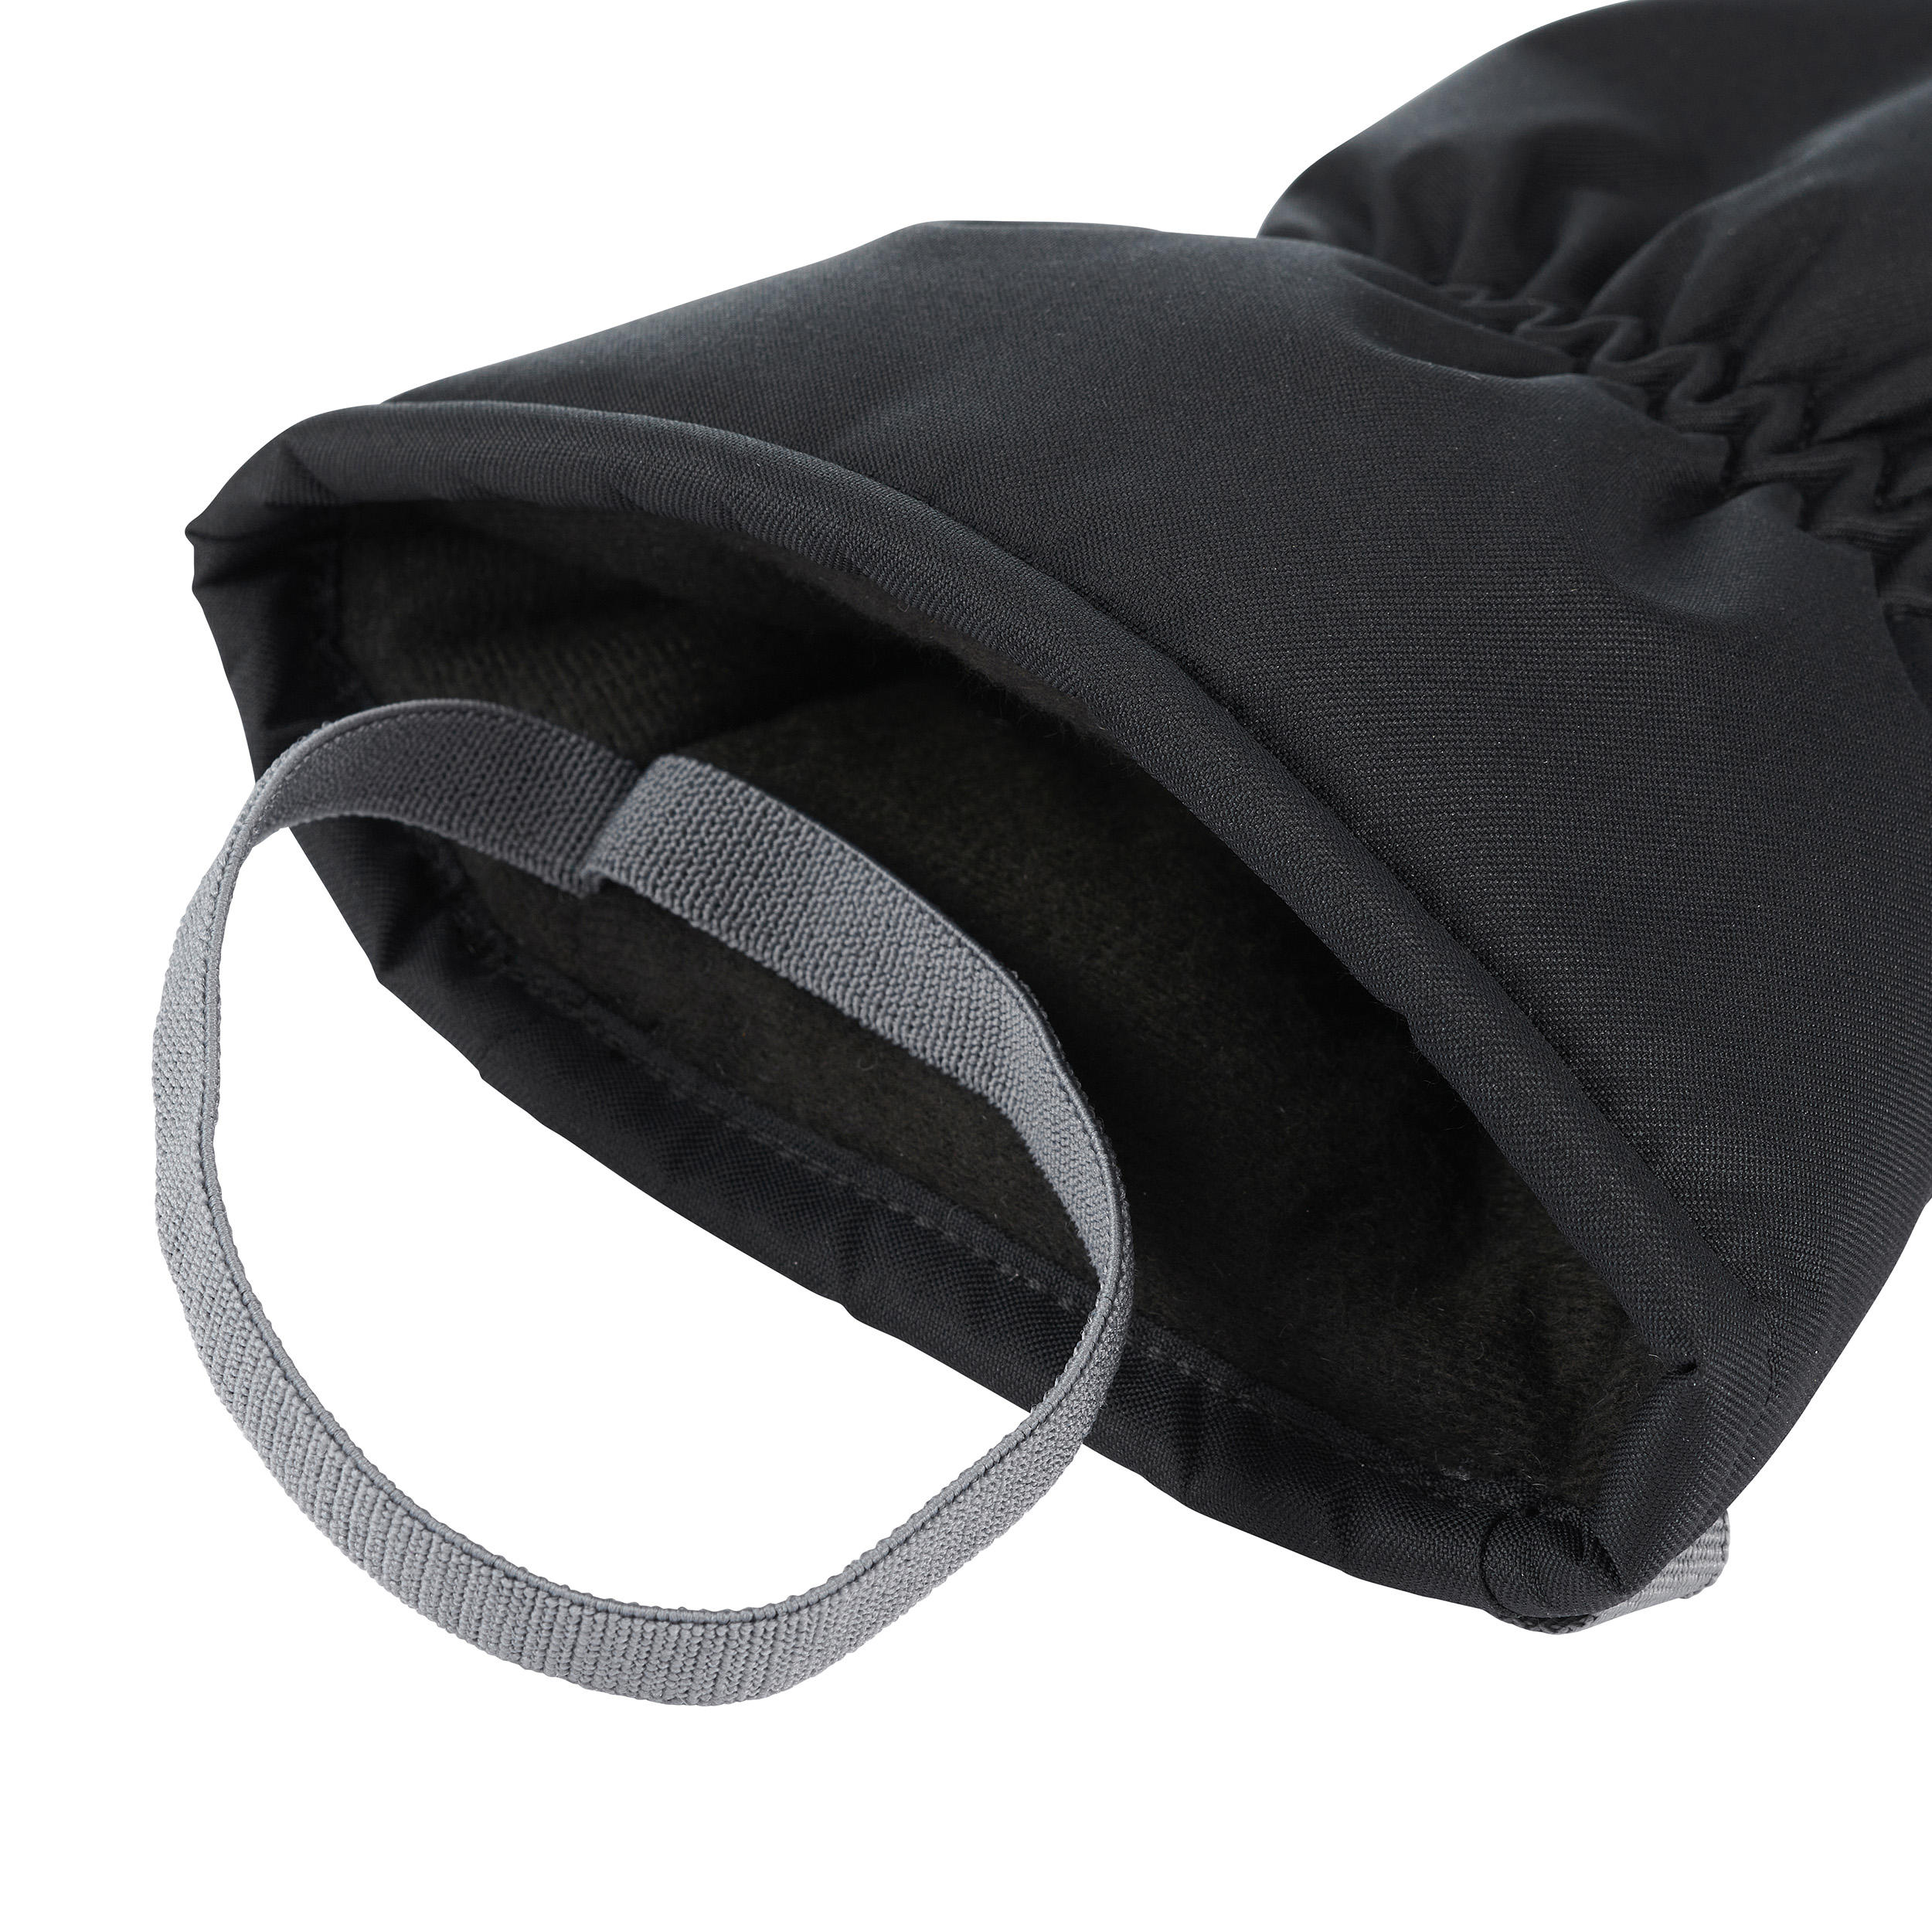 Warm Ski Gloves - Ski 100 Black - Black, Sand - Wedze - Decathlon